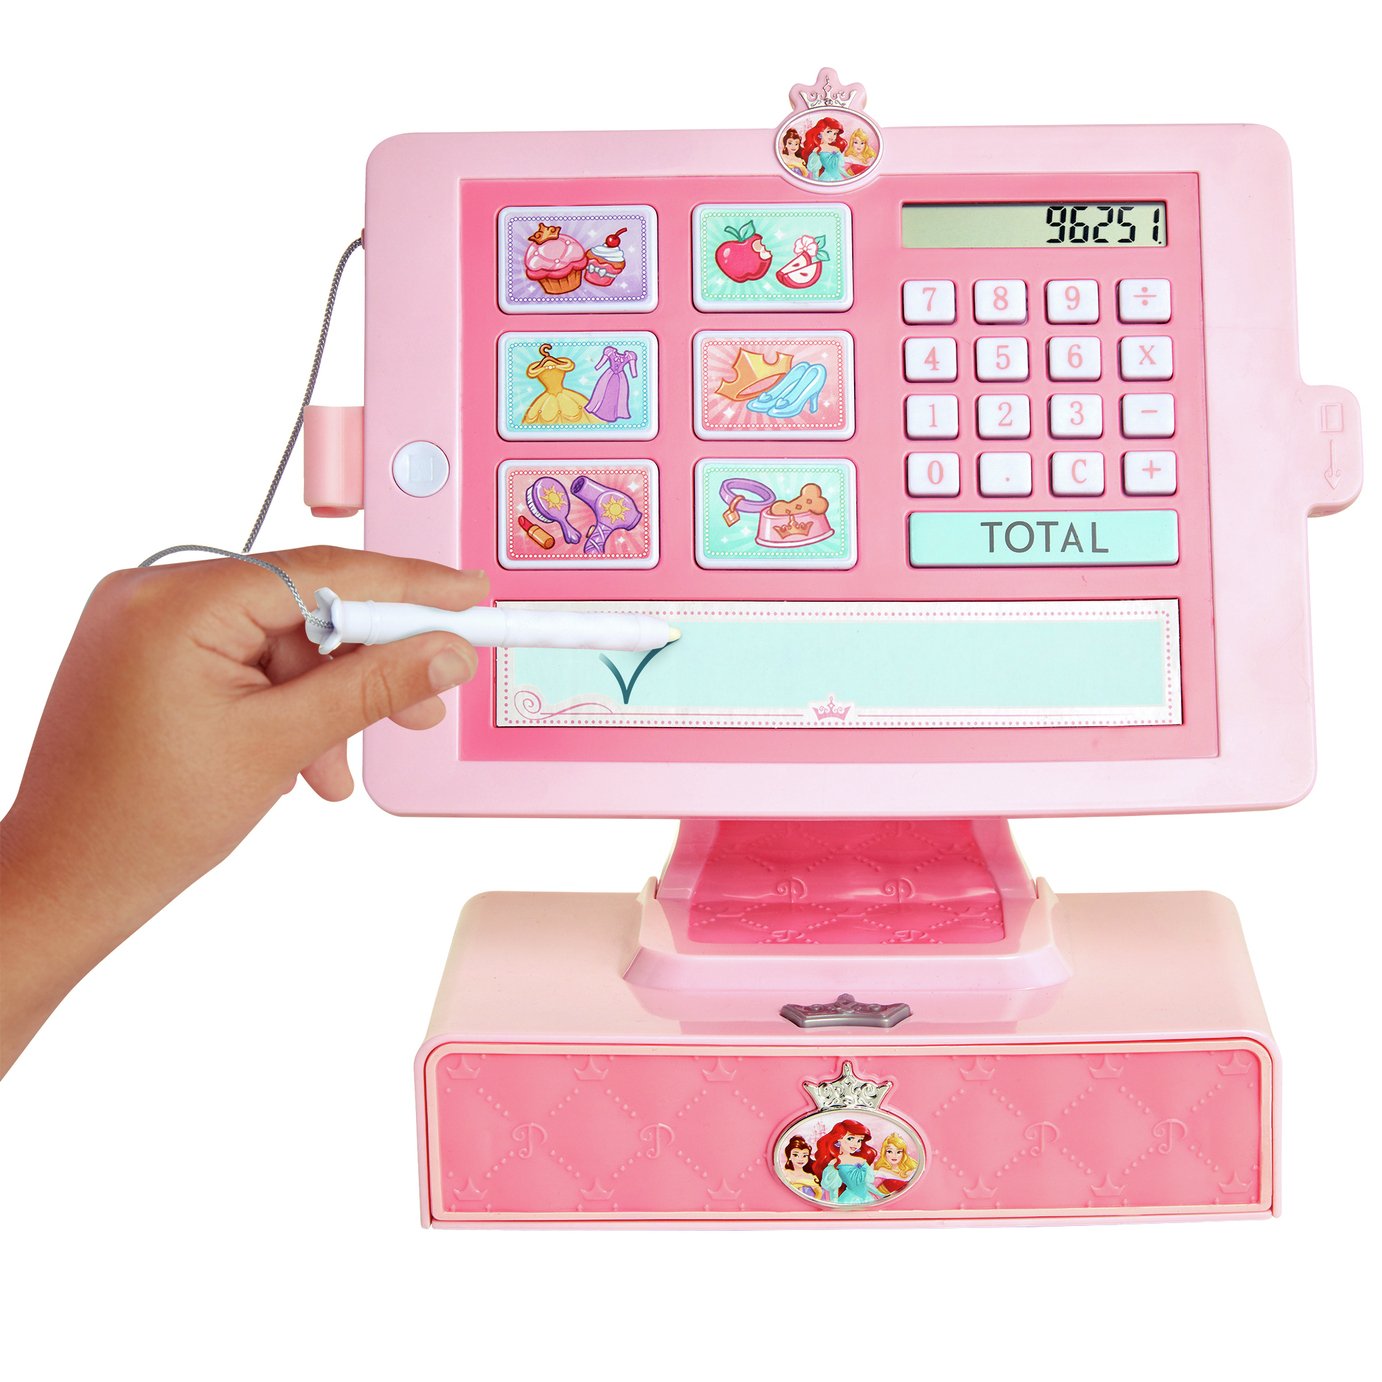 toy cash register argos